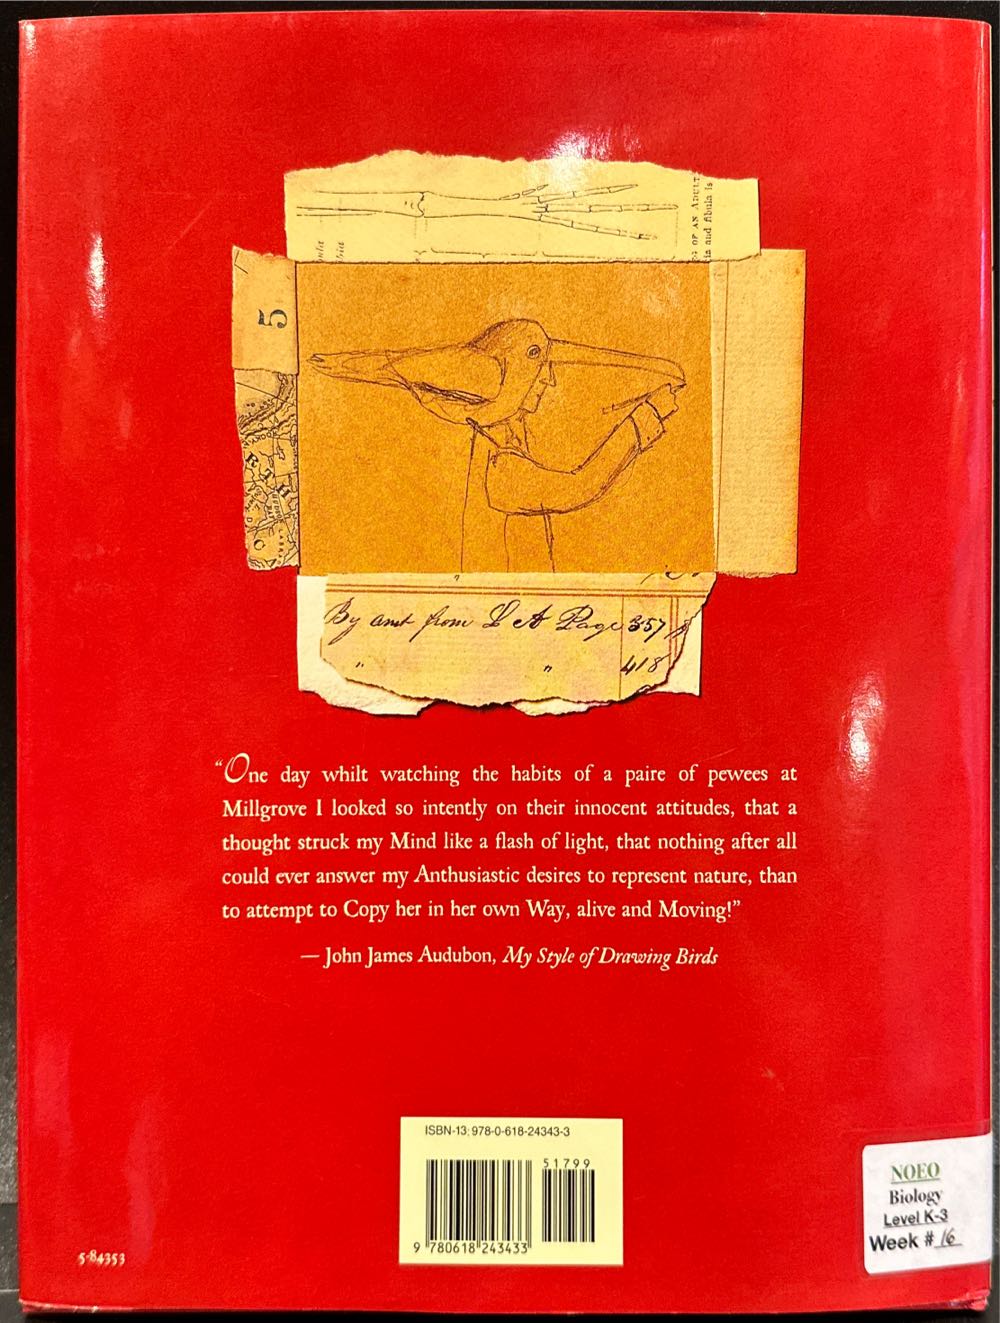 The Boy Who Drew Birds: A Story of John James Audubon - Jacqueline Davies (Houghton Mifflin Company - Hardcover) book collectible [Barcode 9780618243433] - Main Image 3